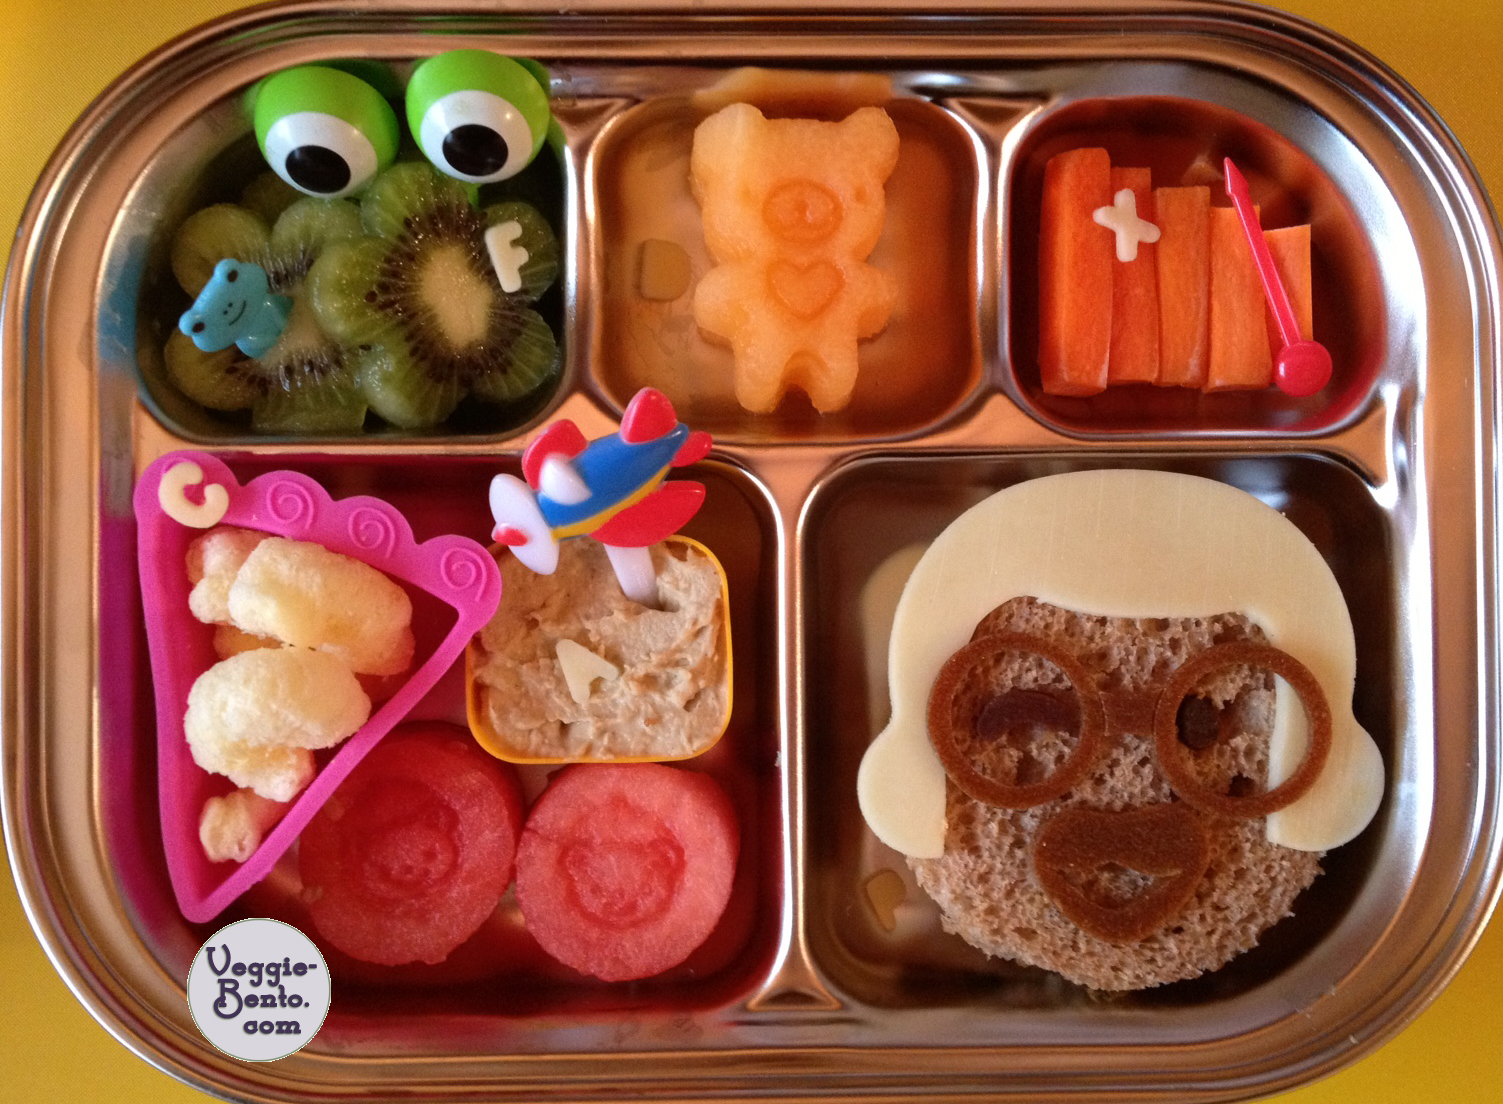 Fun Lunchbox with a Fun Lunch to Match Veggie-Bento